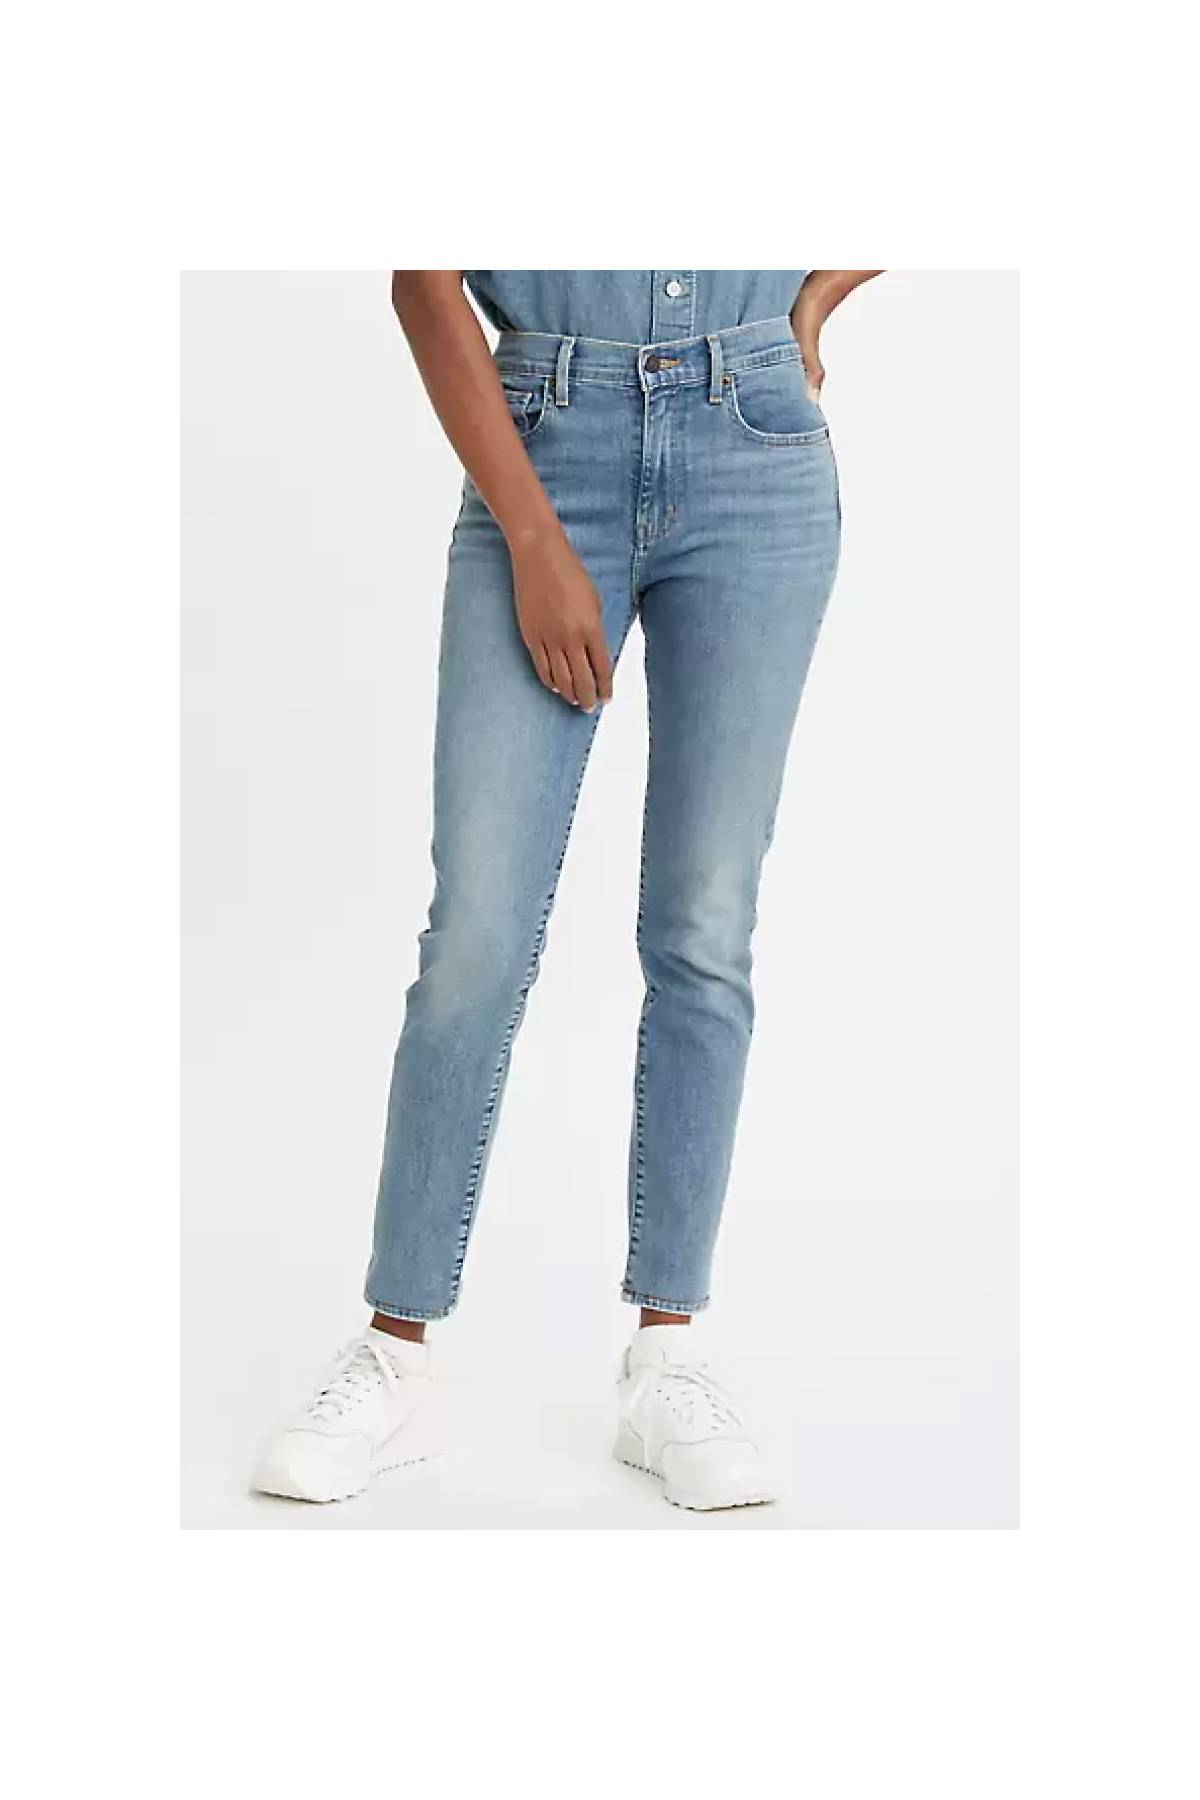 Model wearing 721 high-rise skinny jeans